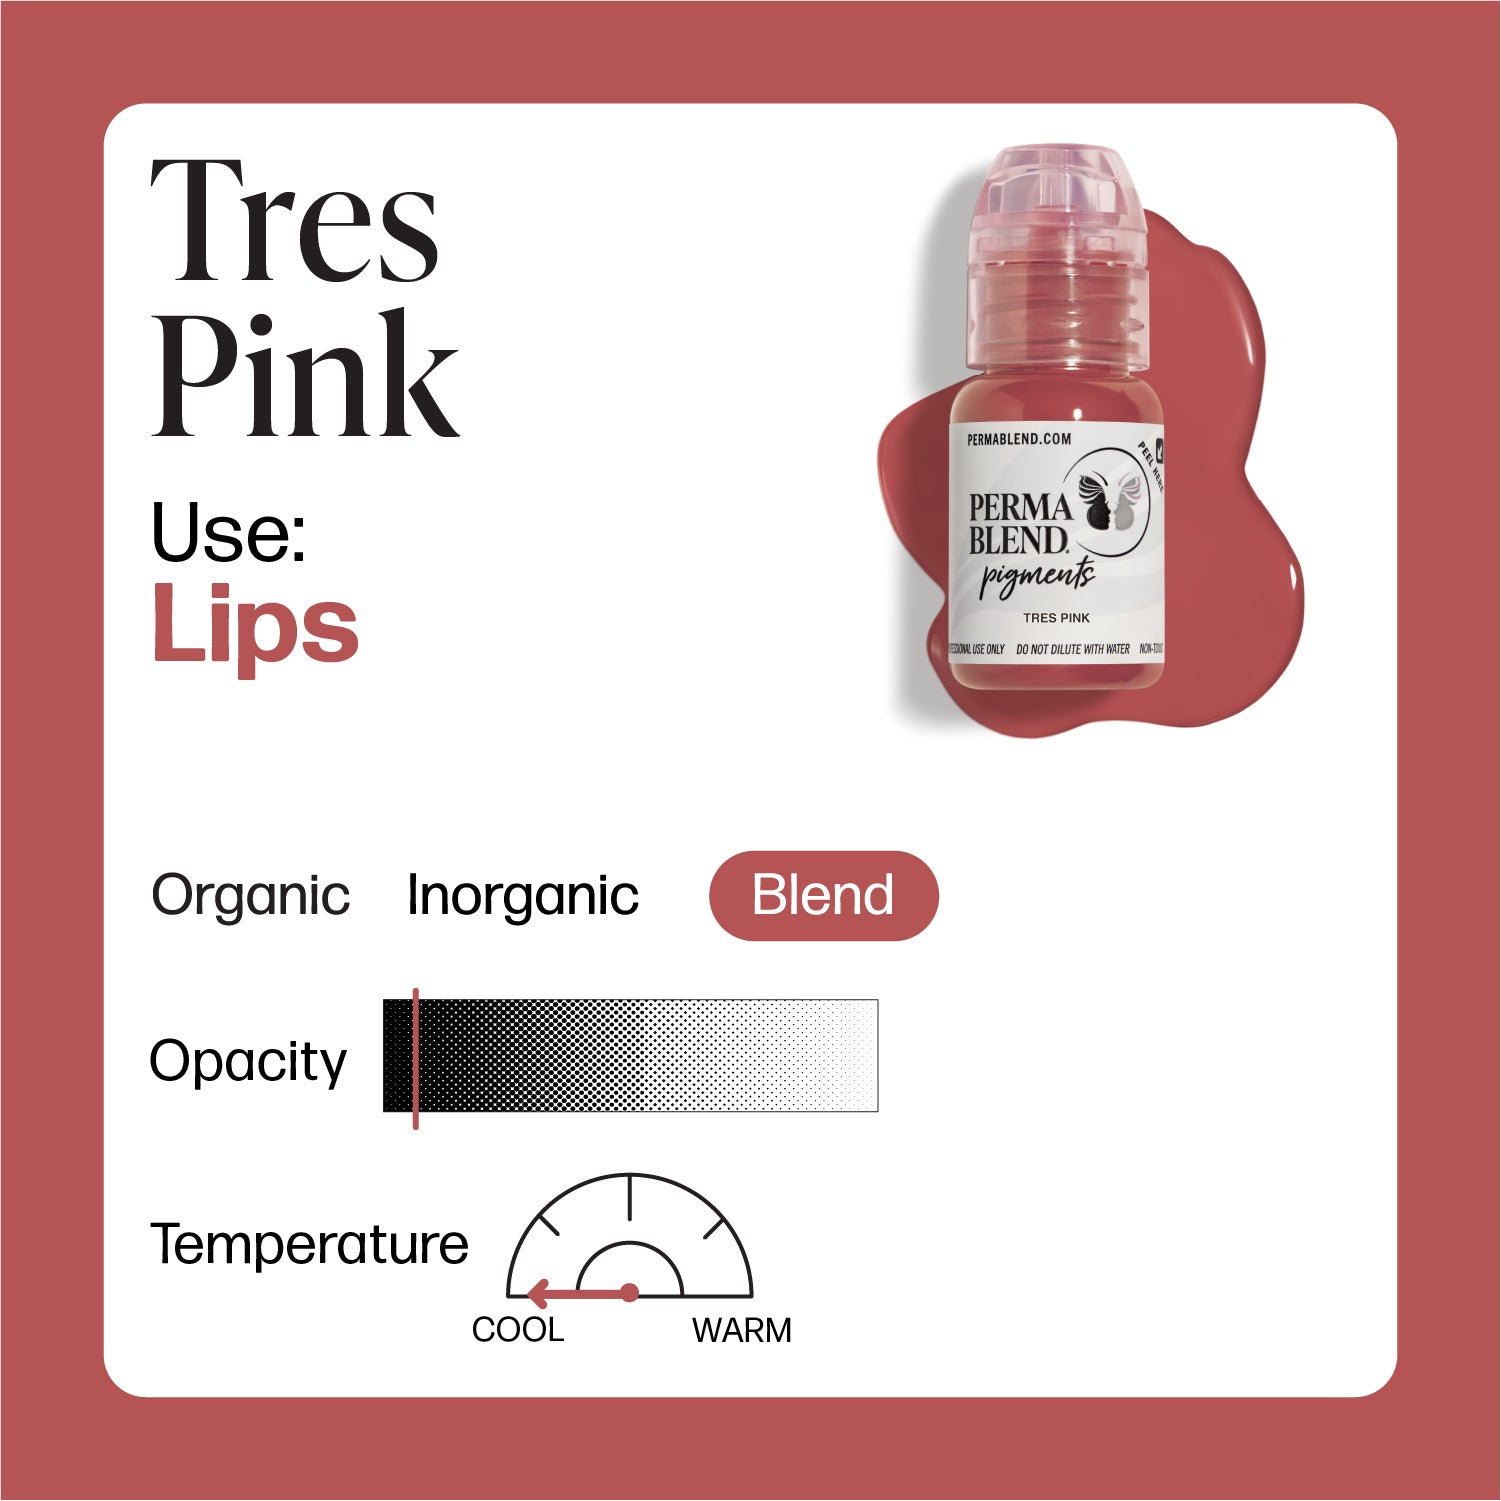 Perma Blend - Tres Pink